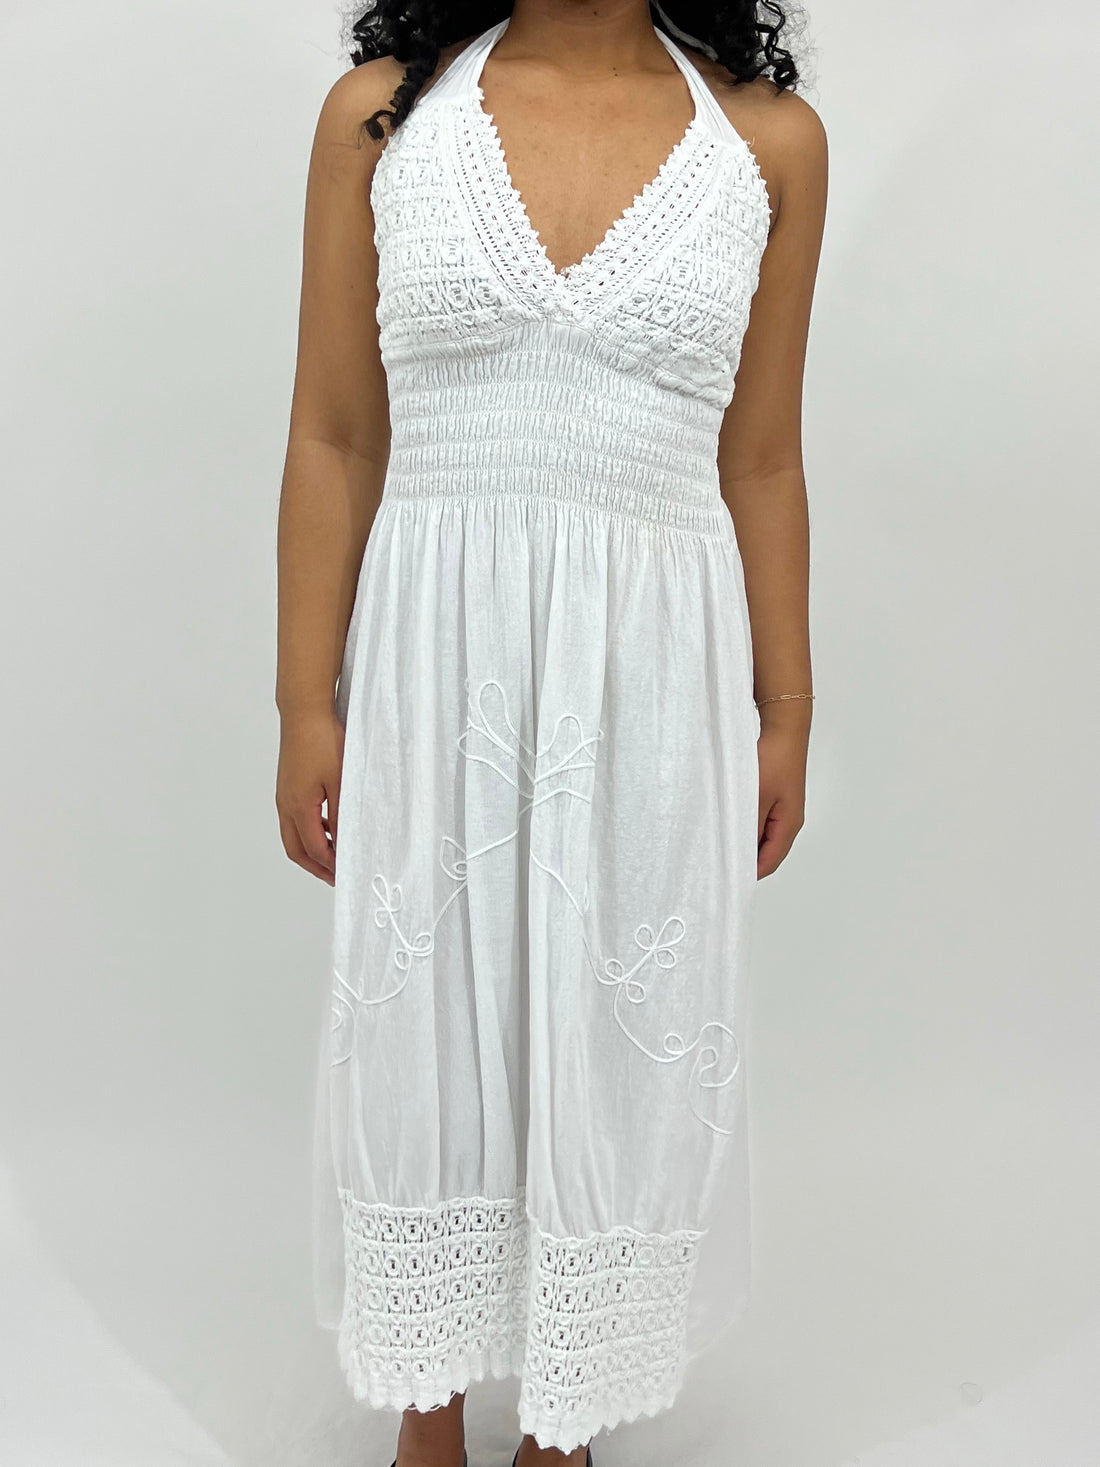 White Crochet Top Maxi Dress (S-M)